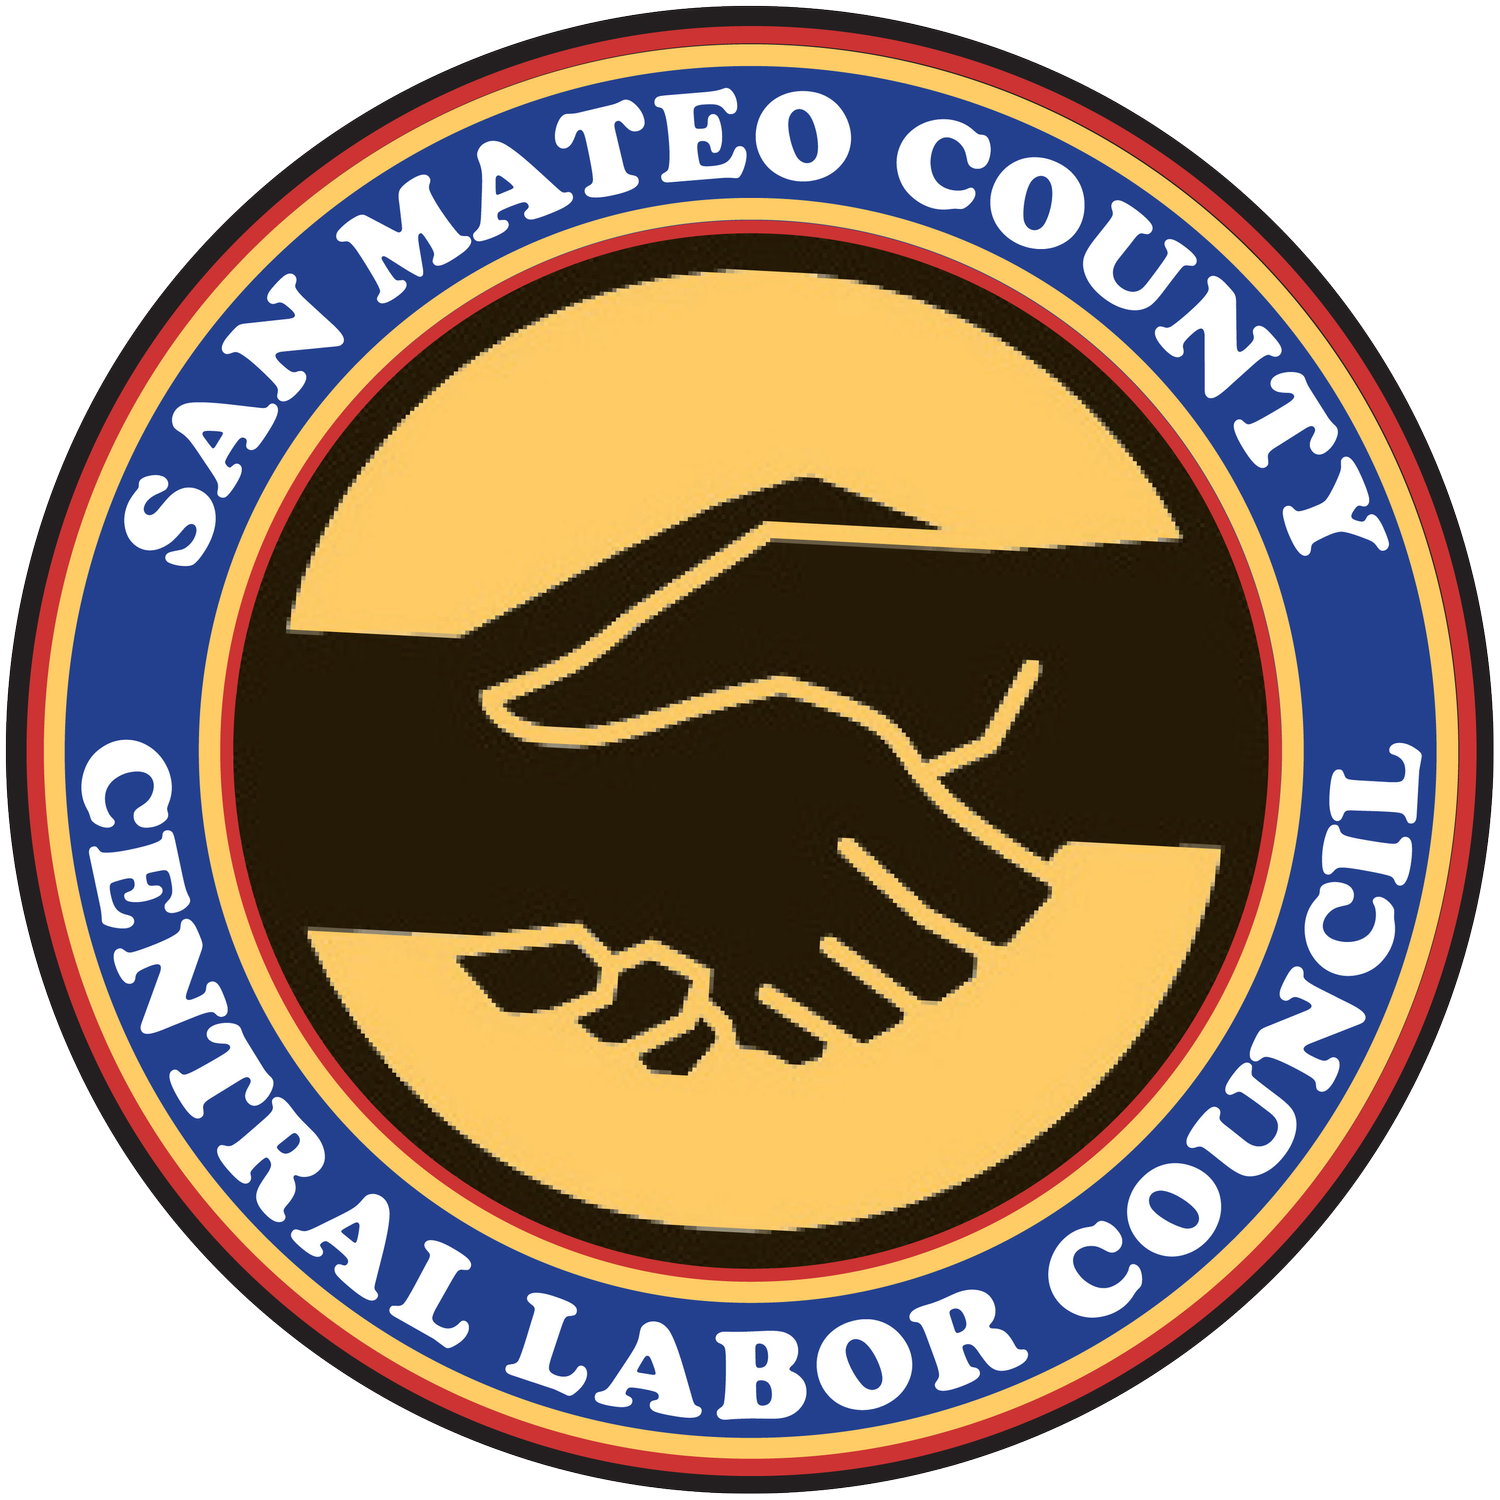 San Mateo County Central Labor Council